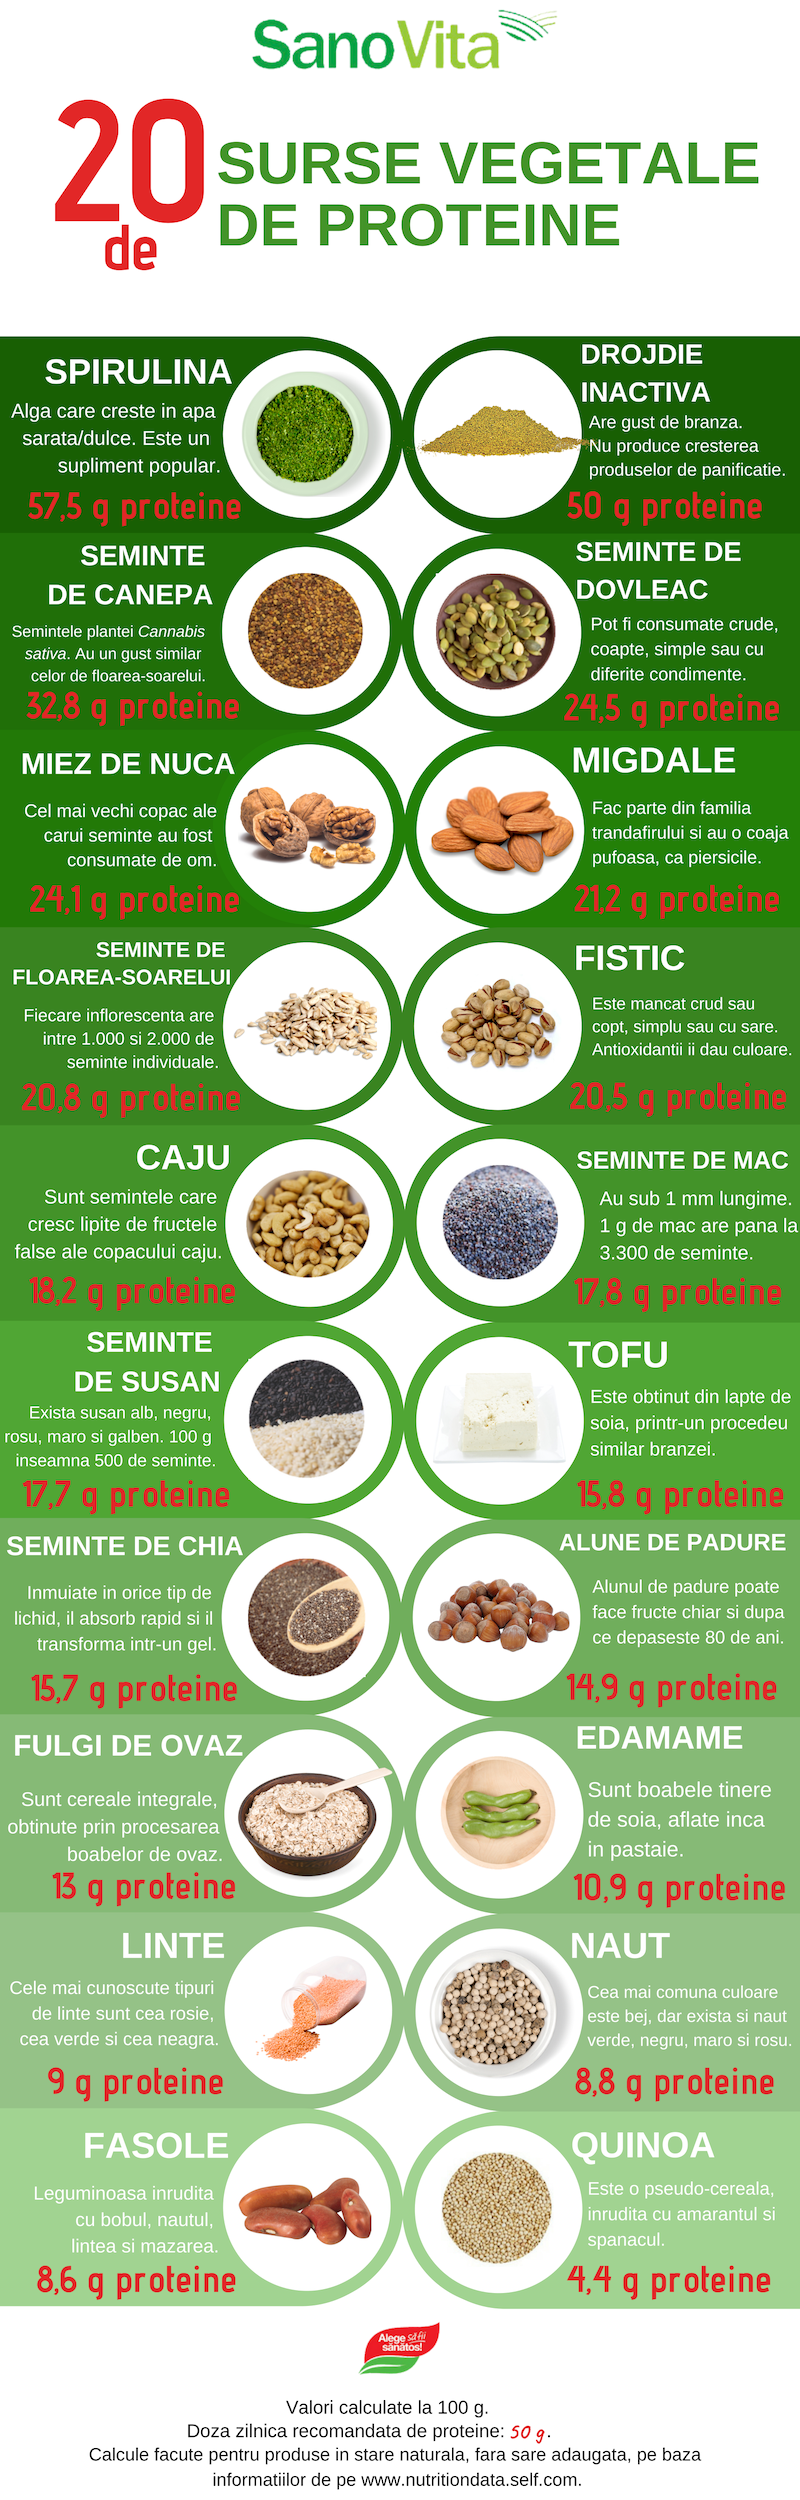 20 de surse de proteine vegetale